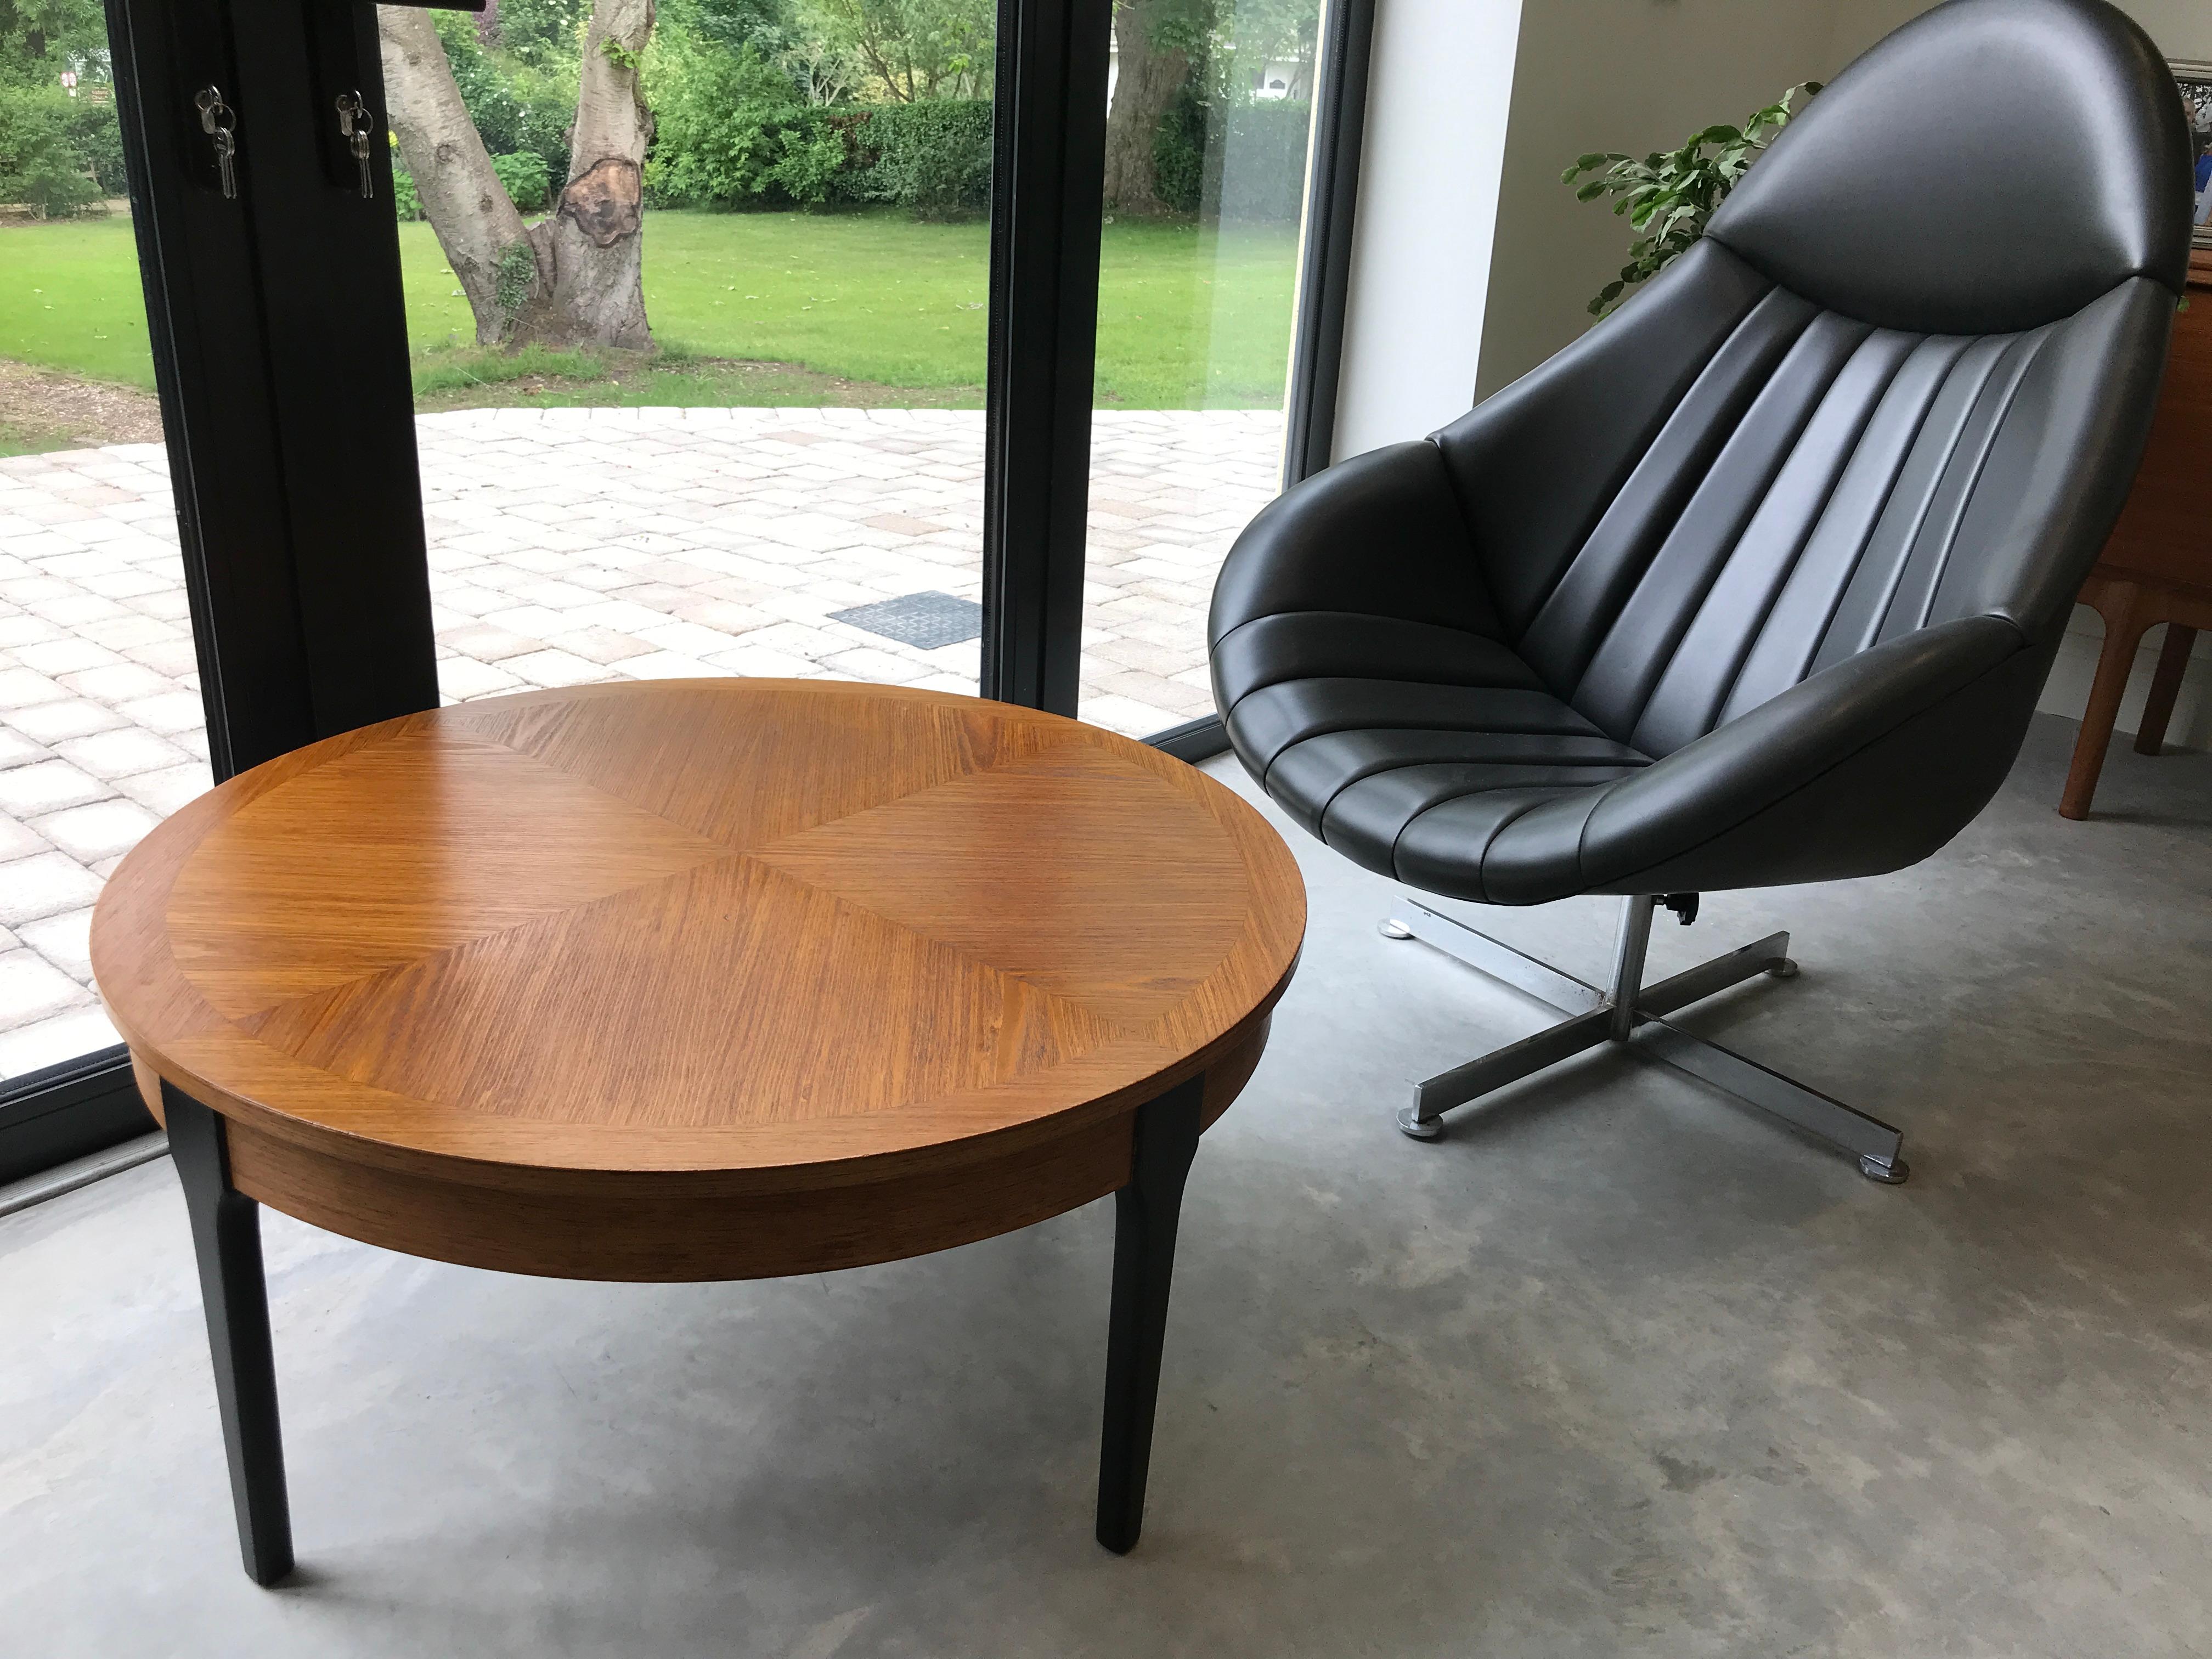 20th Century Exquisite Danish 1960s Retro Teak Coffee Table with Black Legs For Sale